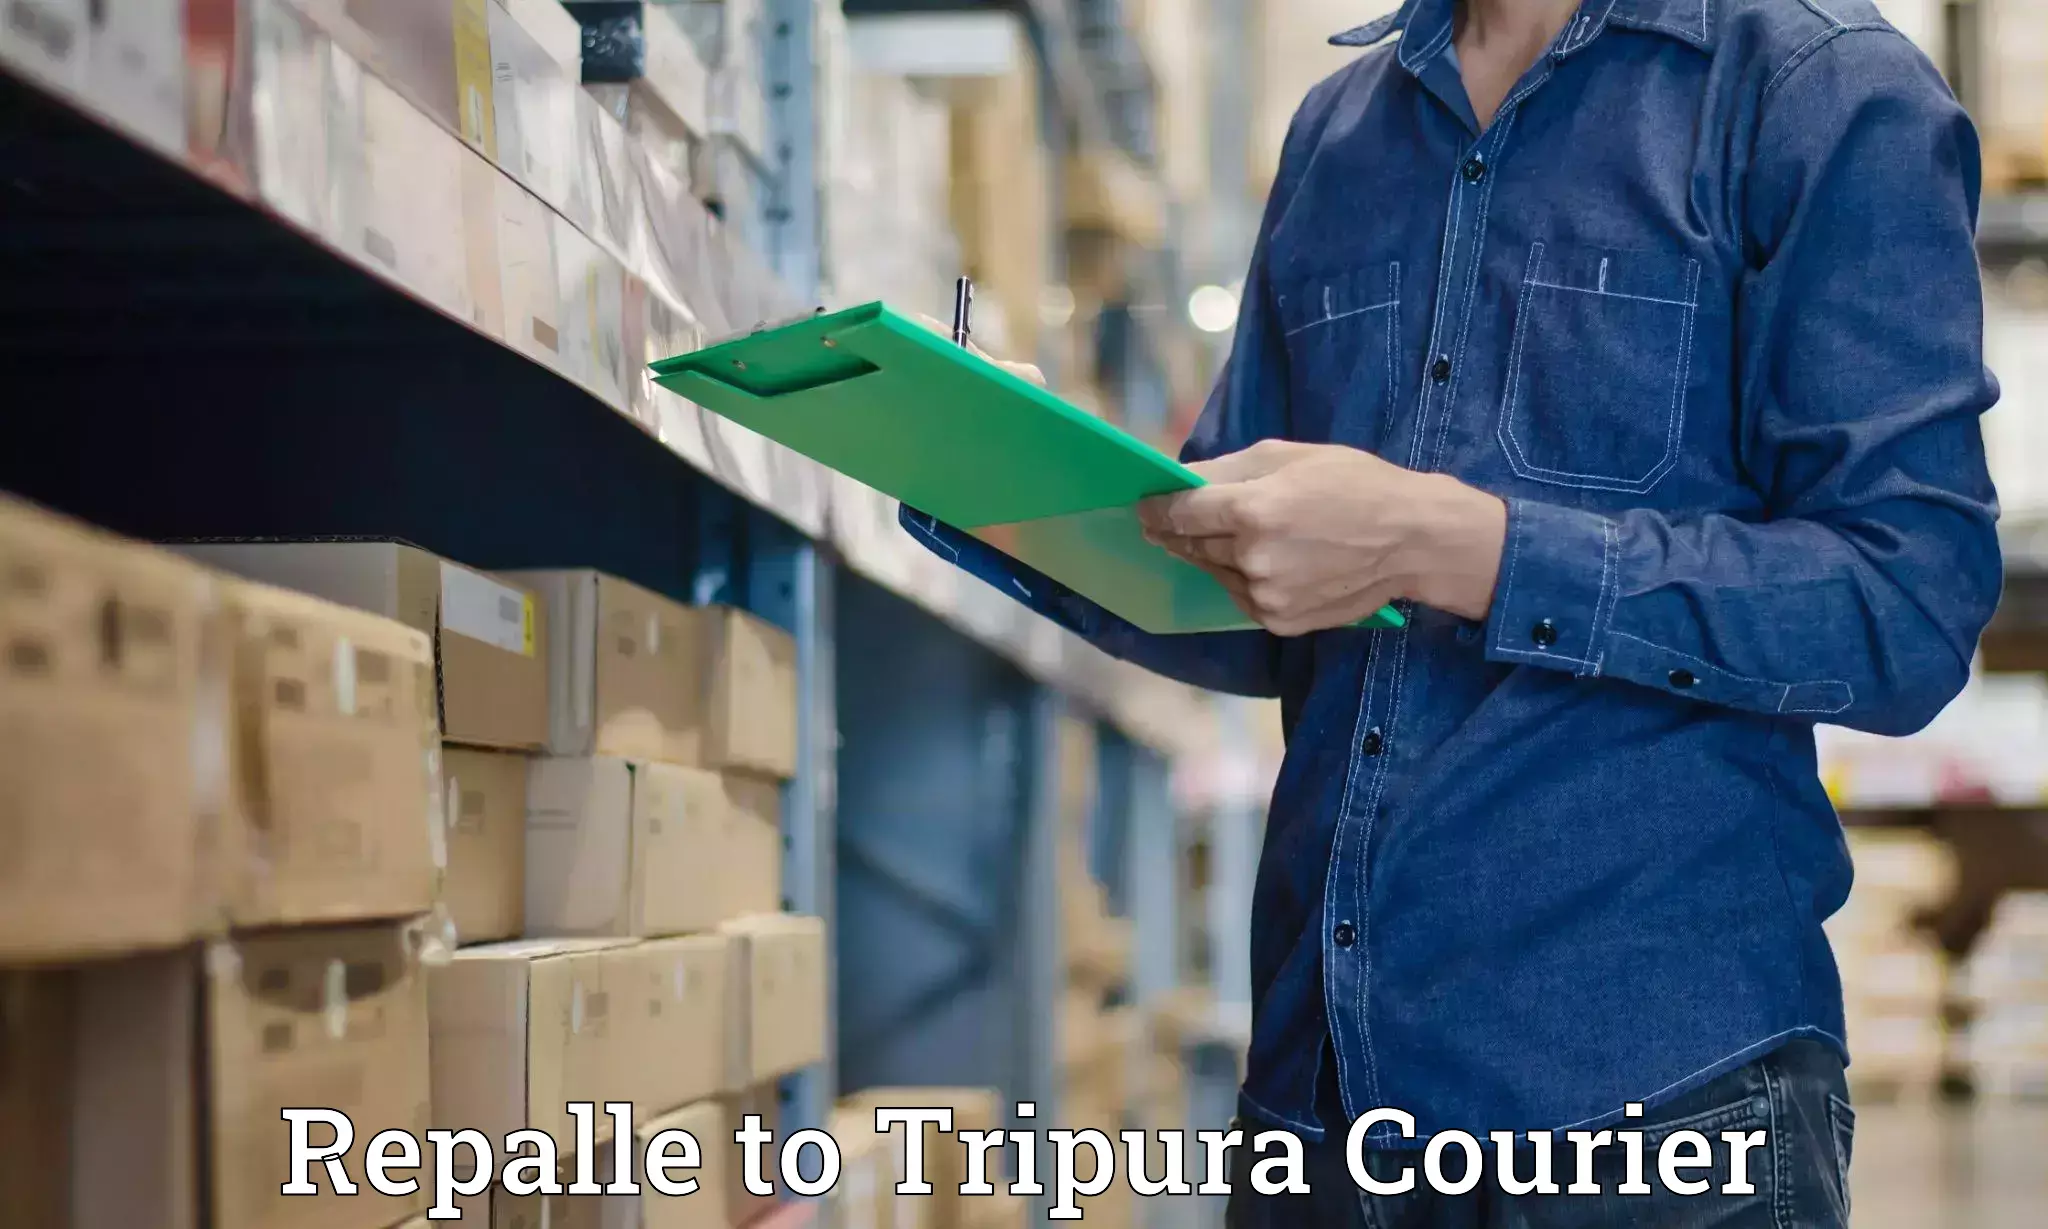 Luggage transit service Repalle to Tripura